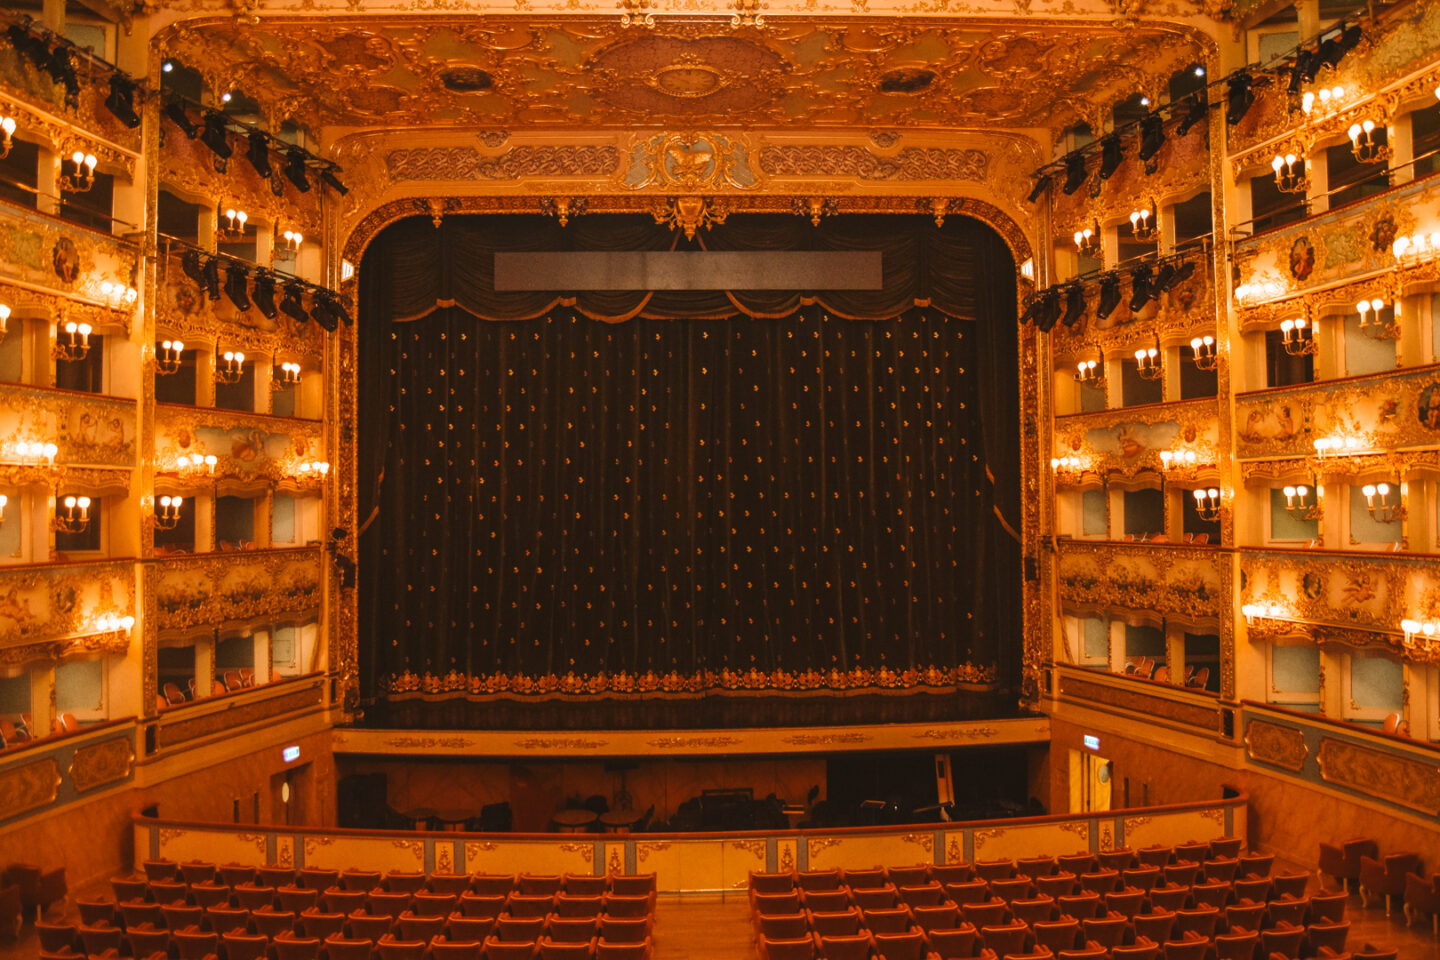 Teatro La Fenice, the Venice Opera House